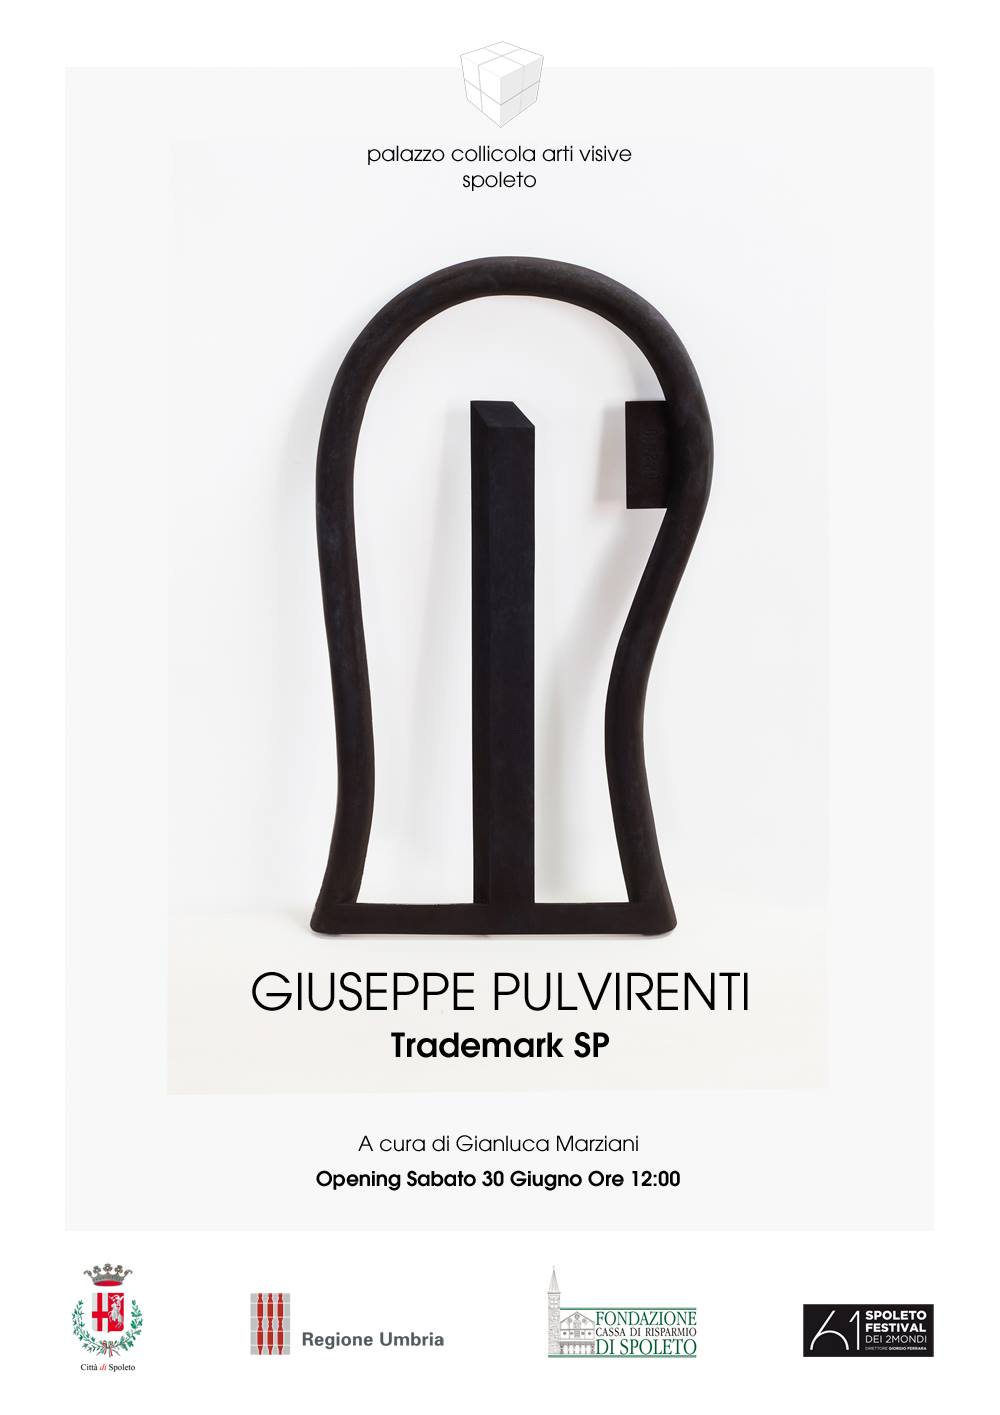 Giuseppe Pulvirenti – Trademark SP